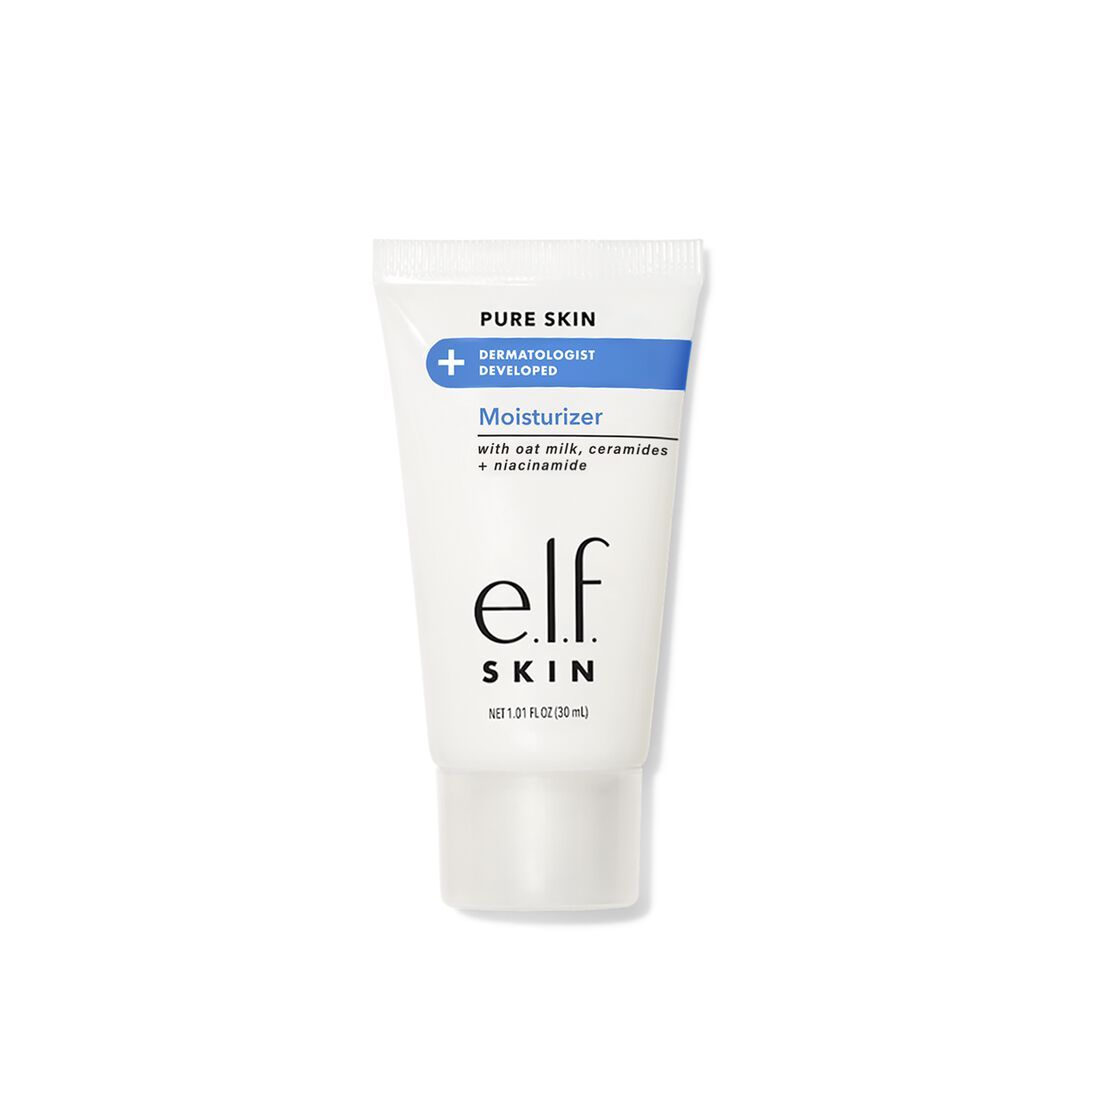 Pure Skin Moisturizer Mini | e.l.f. cosmetics (US)